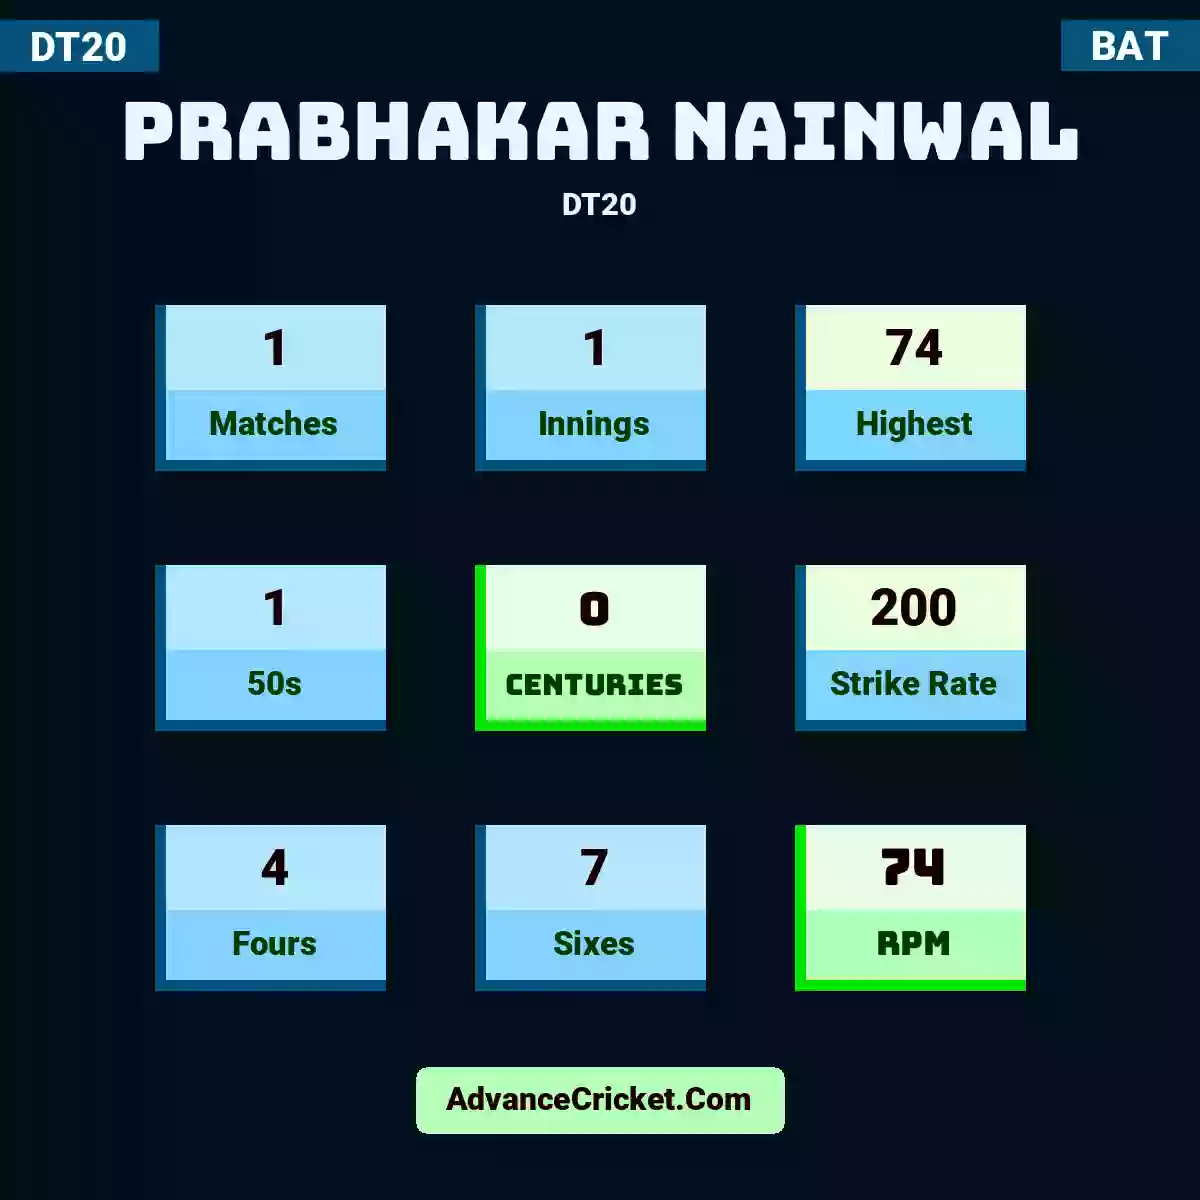 Prabhakar Nainwal DT20 , Prabhakar Nainwal played 1 matches, scored 74 runs as highest, 1 half-centuries, and 0 centuries, with a strike rate of 200. P.Nainwal hit 4 fours and 7 sixes, with an RPM of 74.